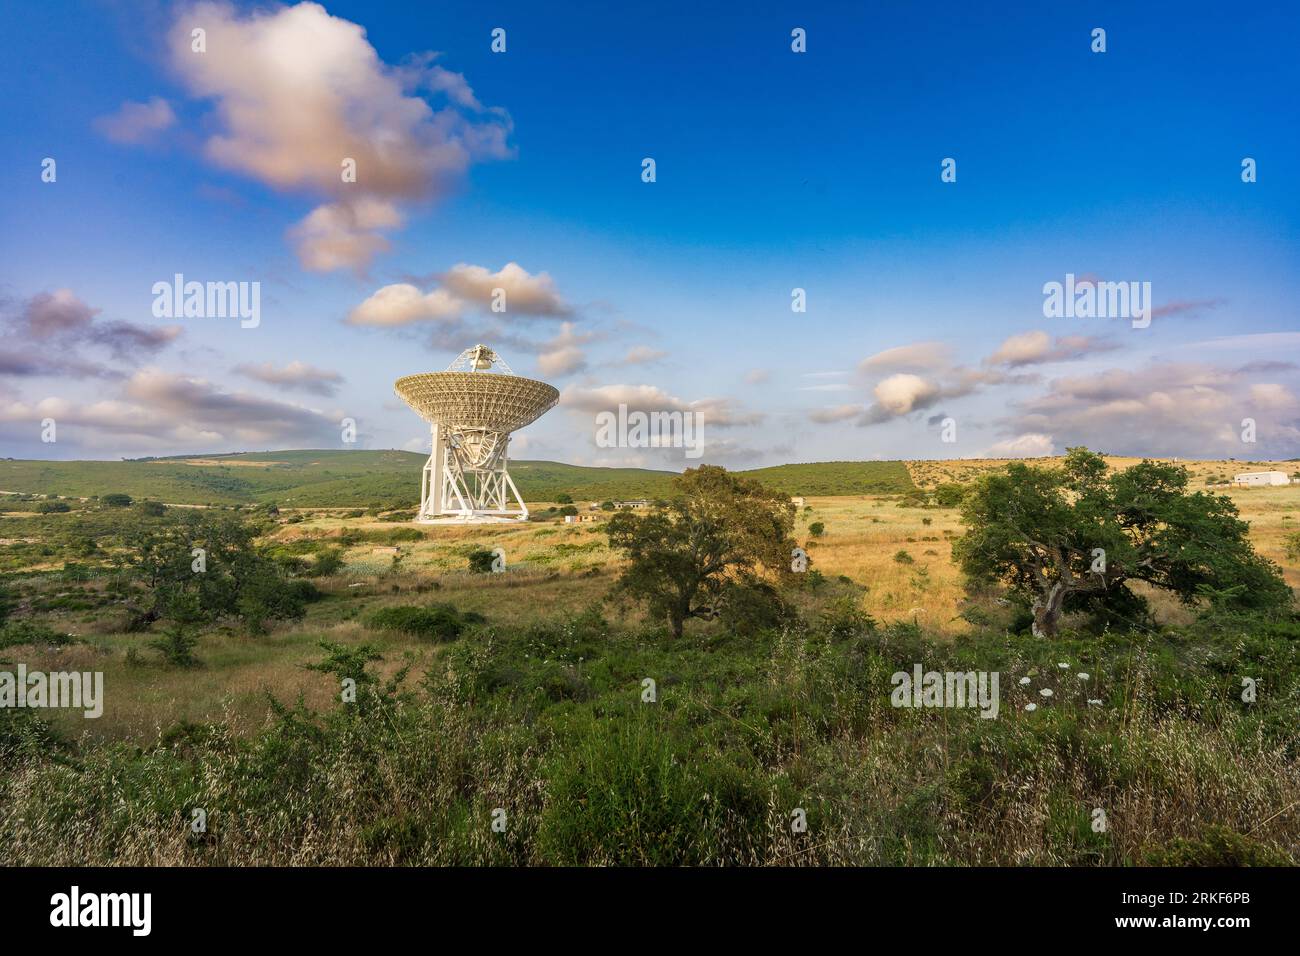 SRT - Sardinia radio Telescope Foto Stock